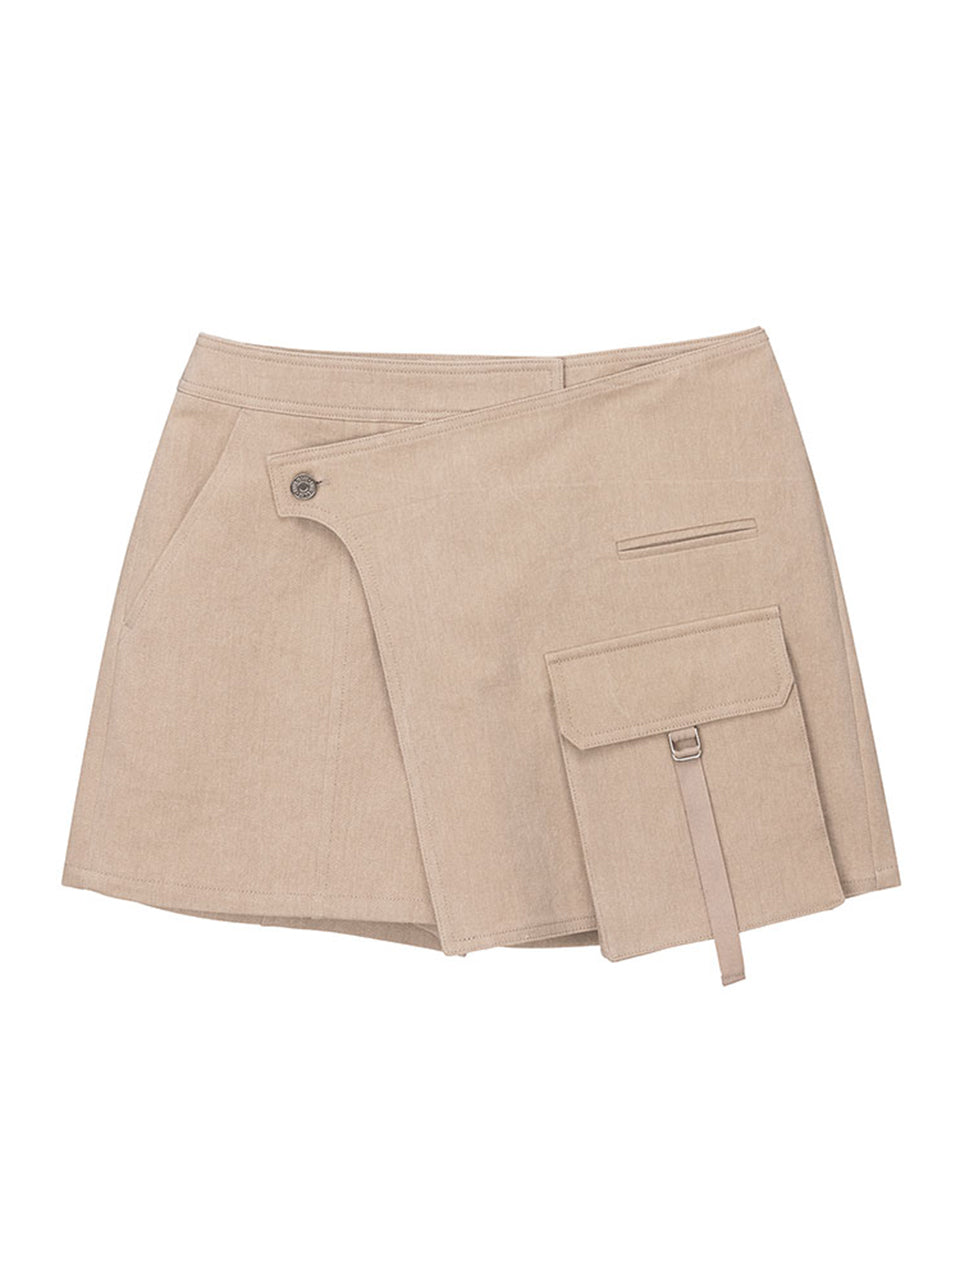 Wrap Pocket Skirt Pants in Beige